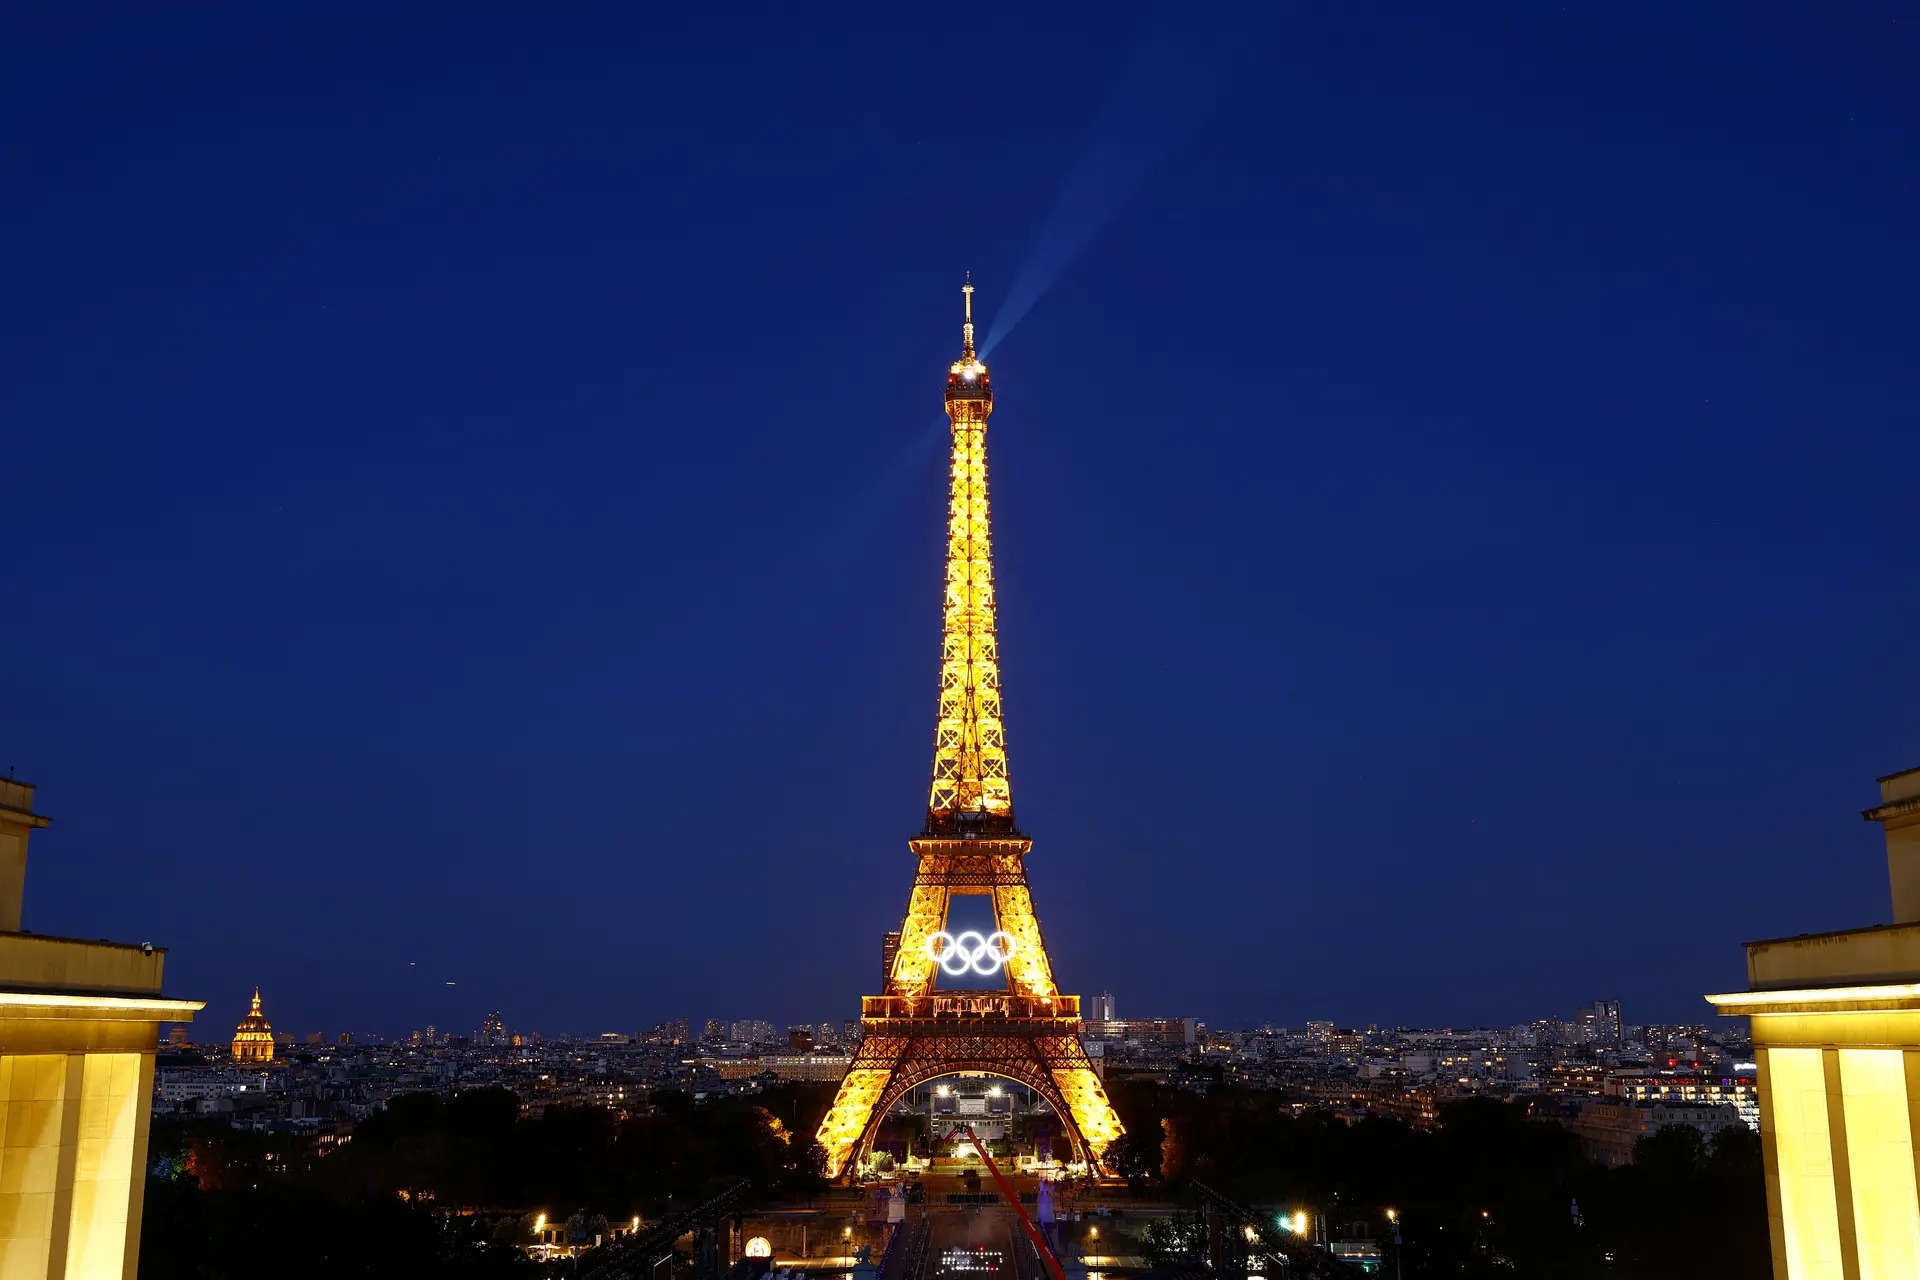 Paris landmarks double up as Olympic venues 